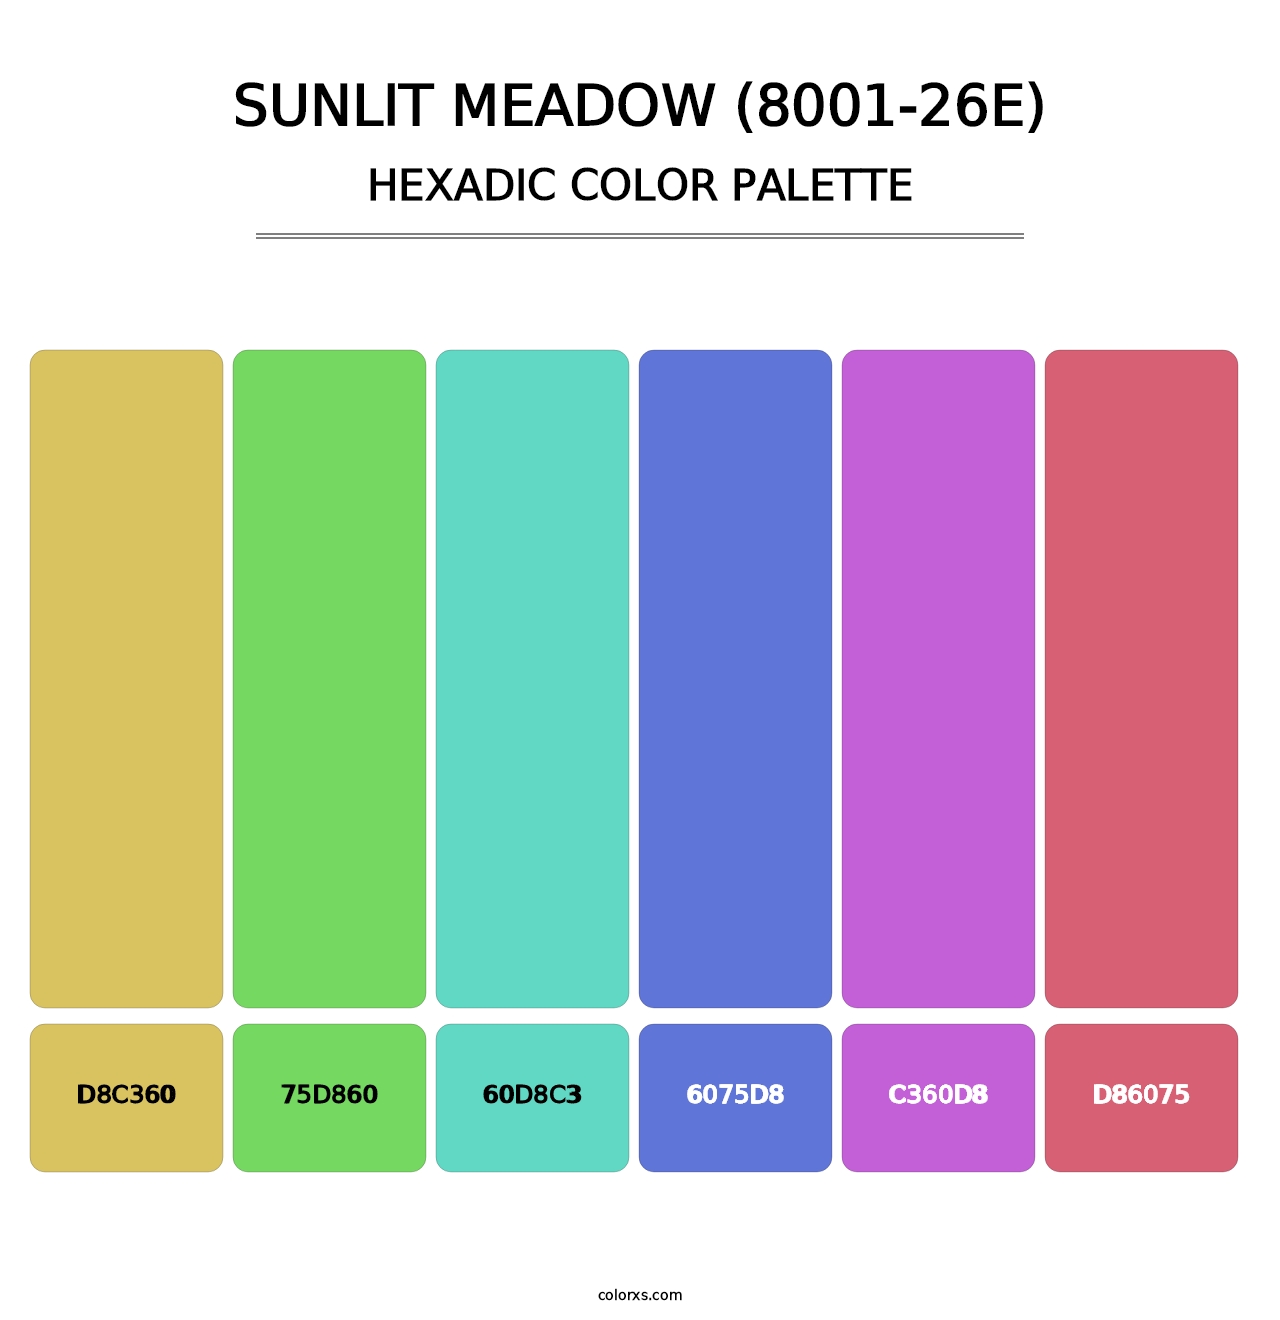 Sunlit Meadow (8001-26E) - Hexadic Color Palette